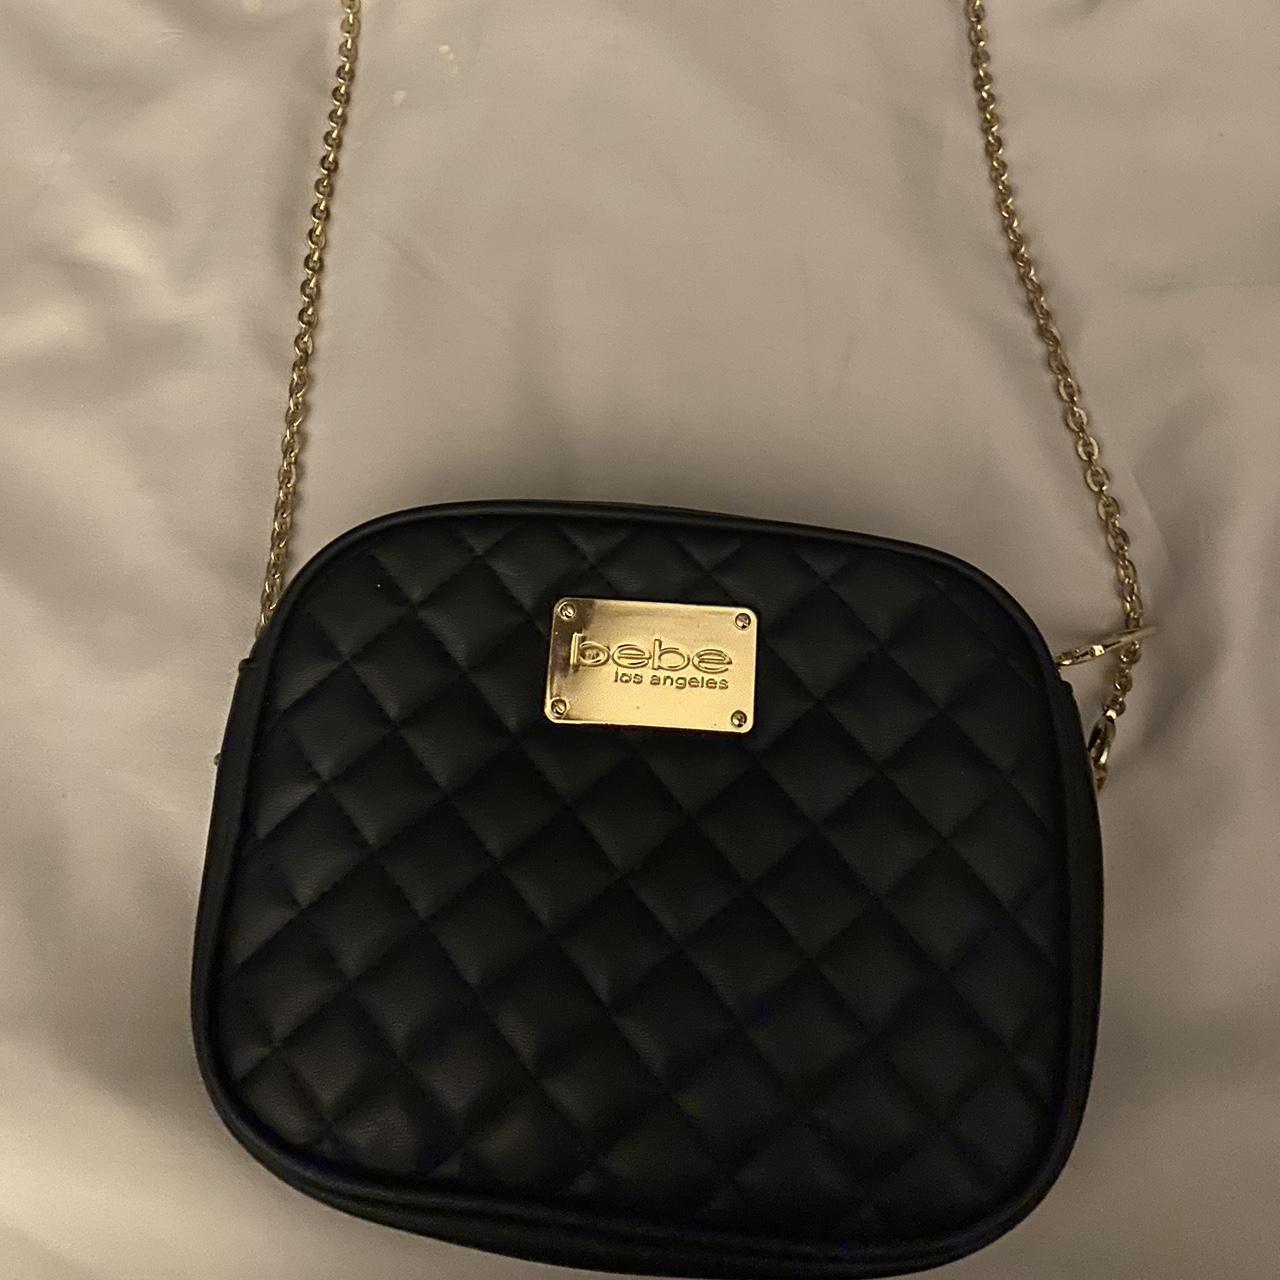 Buy Bebe Black Solid Sling Bag - Handbags for Women 9442267 | Myntra